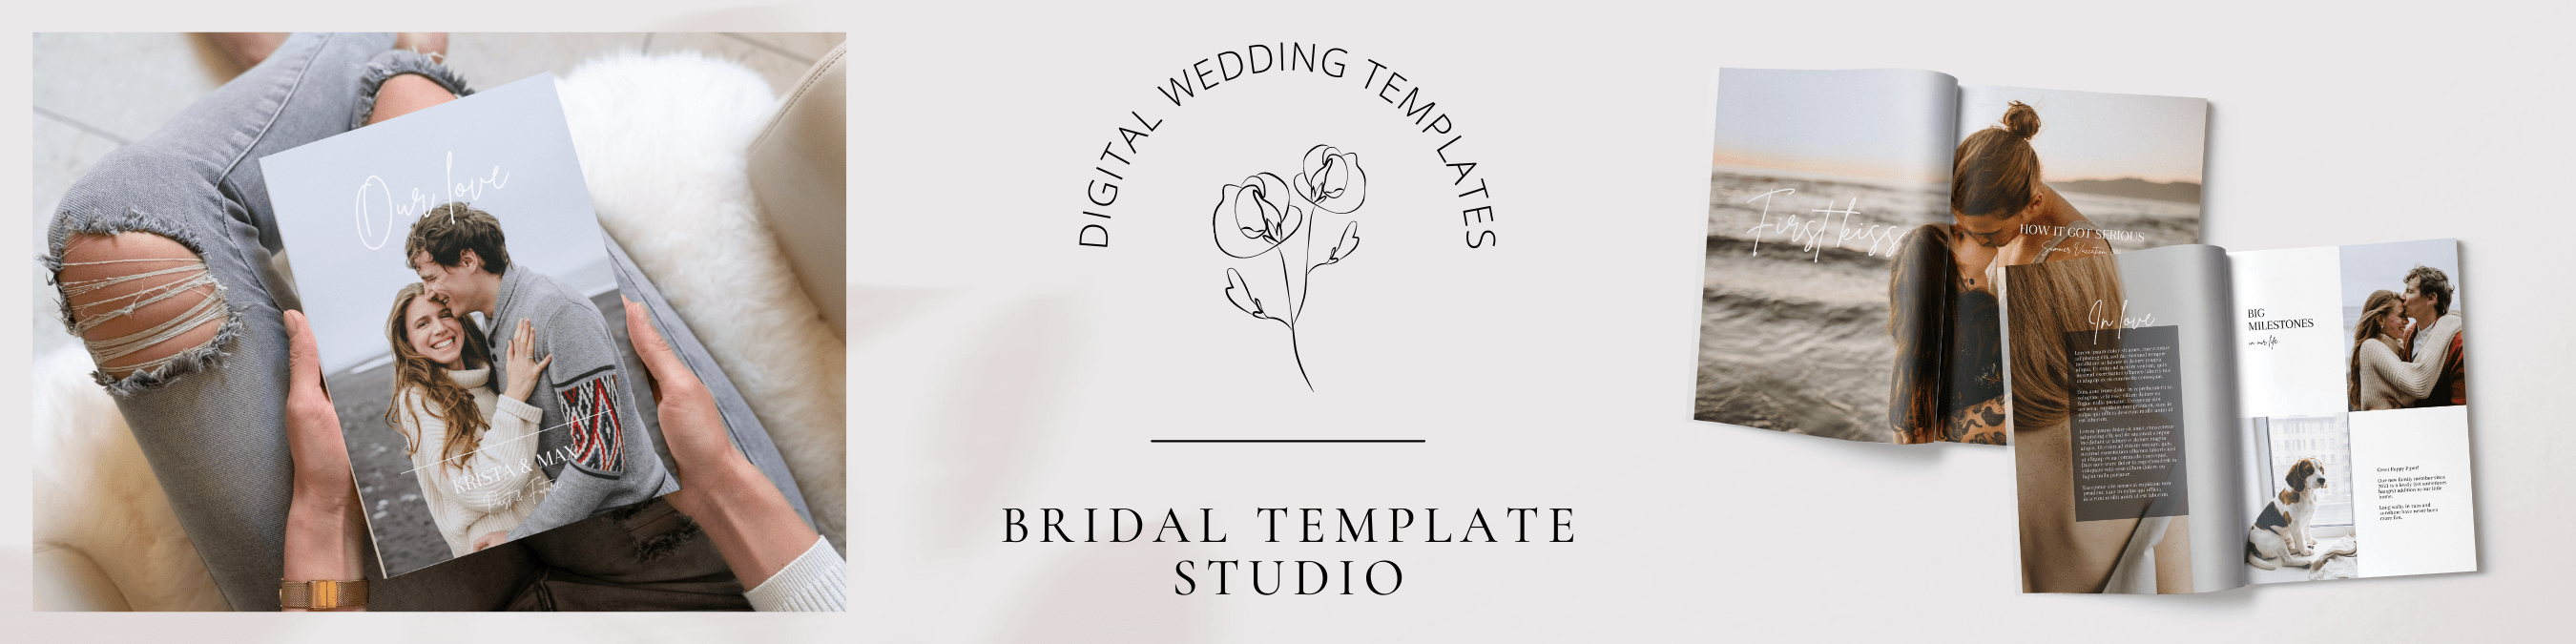 Bridal Template Studio Banner